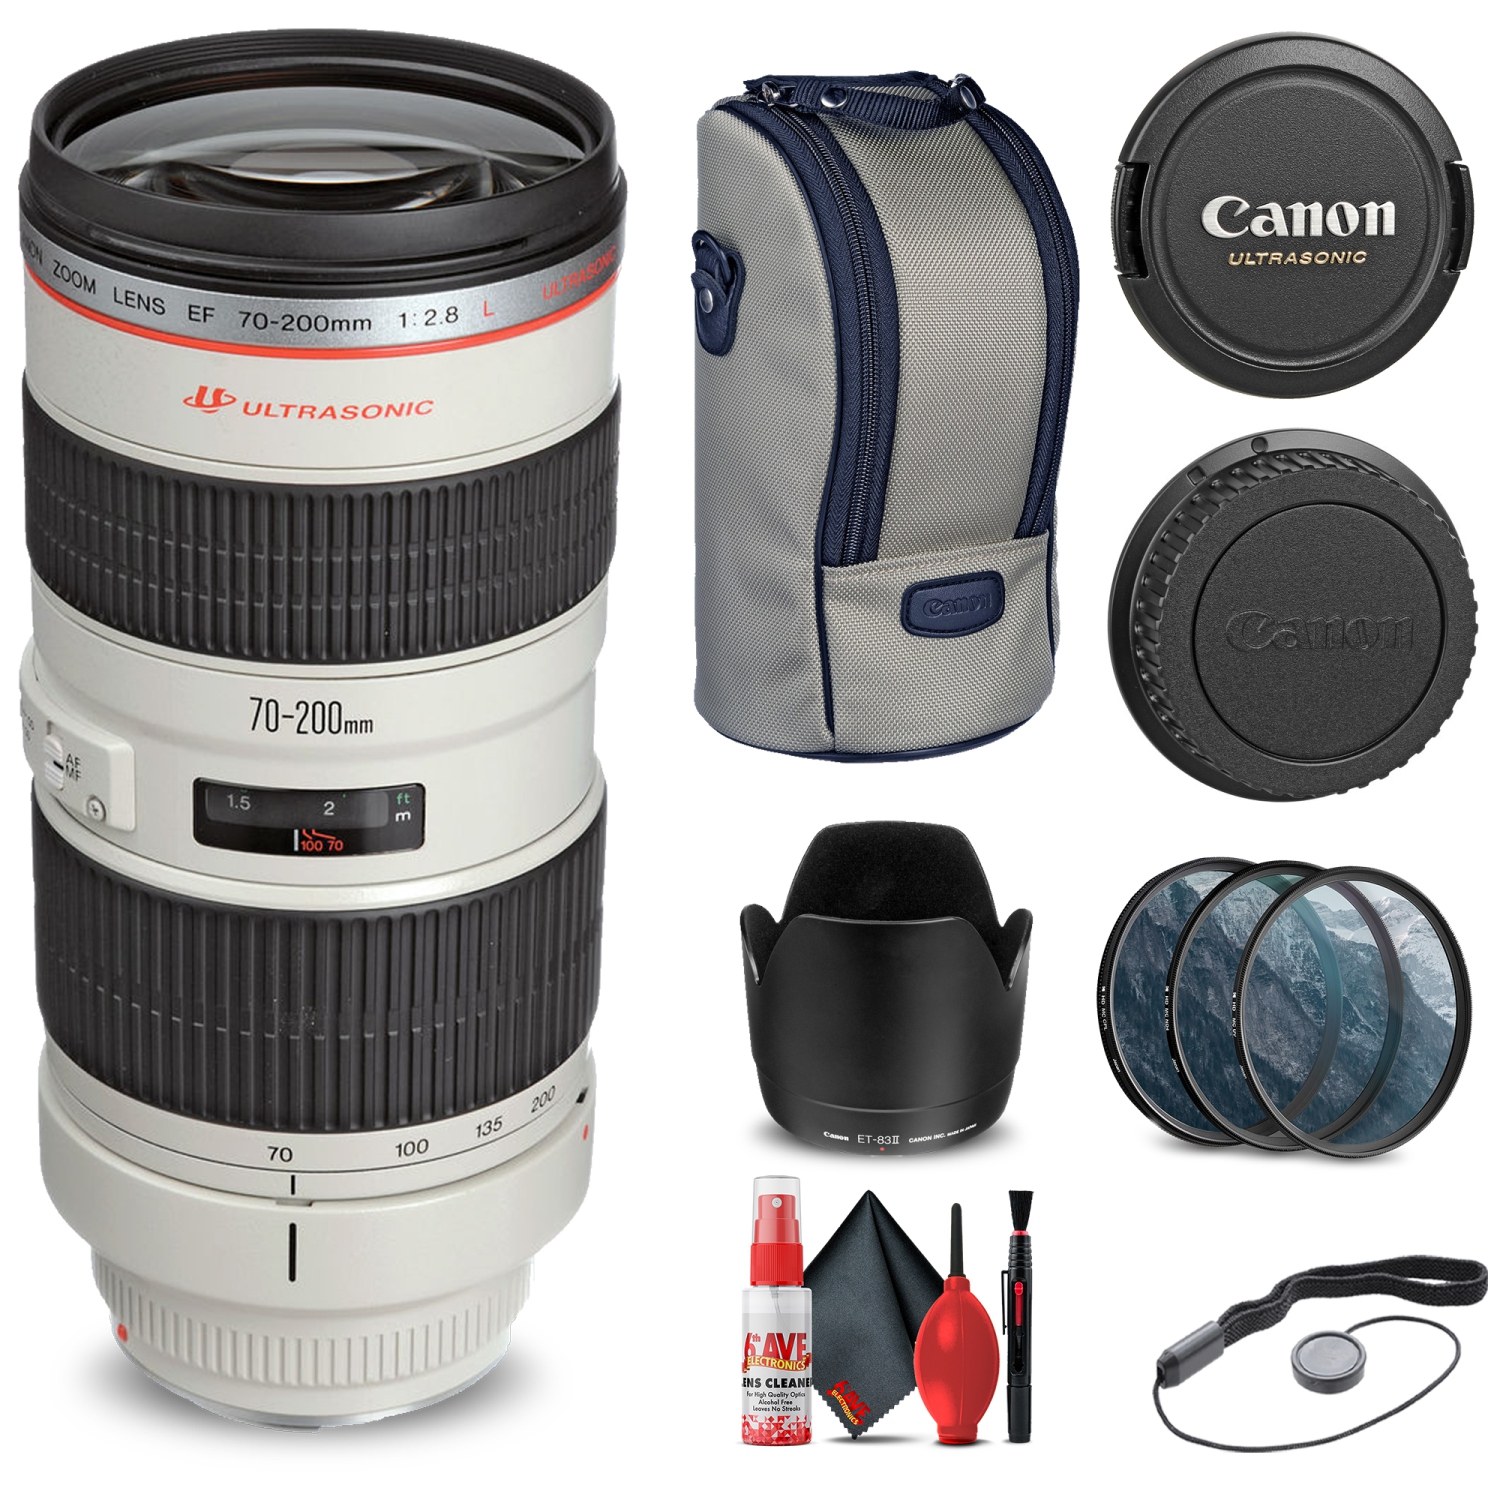 Canon EF 70-200mm f/2.8L USM Lens (2569A004) + Filter Kit + Cap Keeper + More